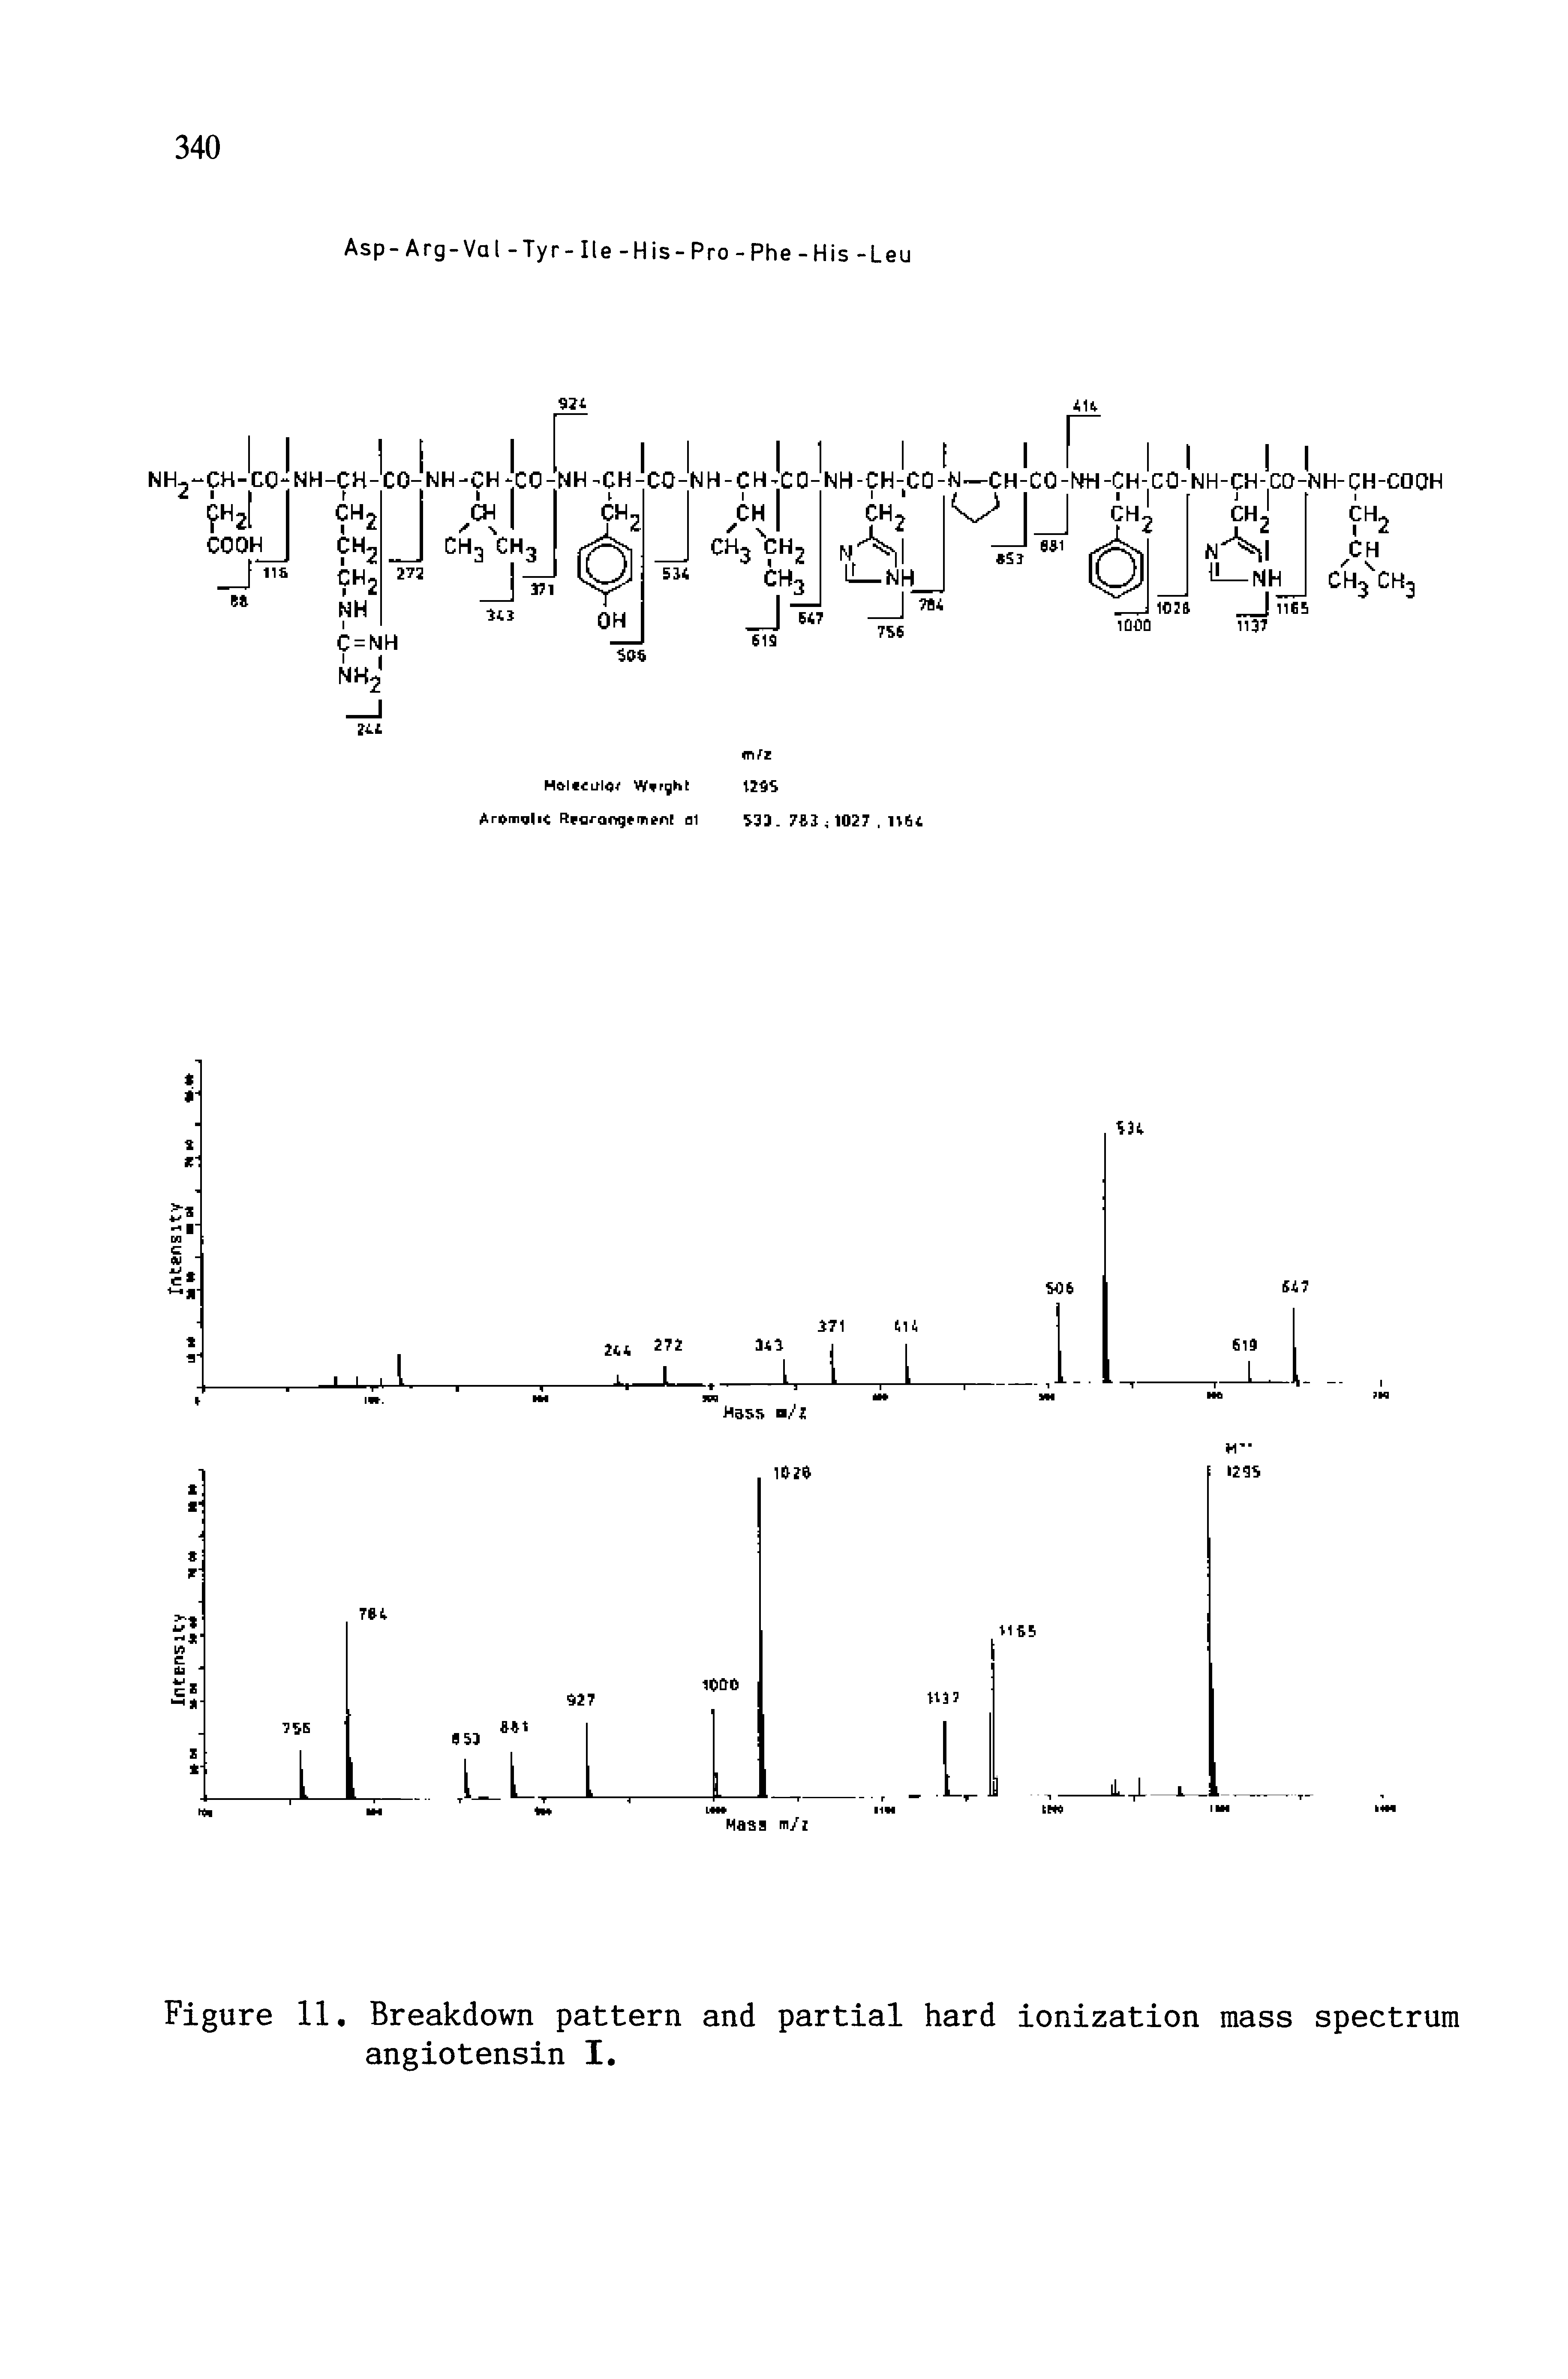 Figure 11, Breakdown pattern and partial hard ionization mass spectrum angiotensin I.